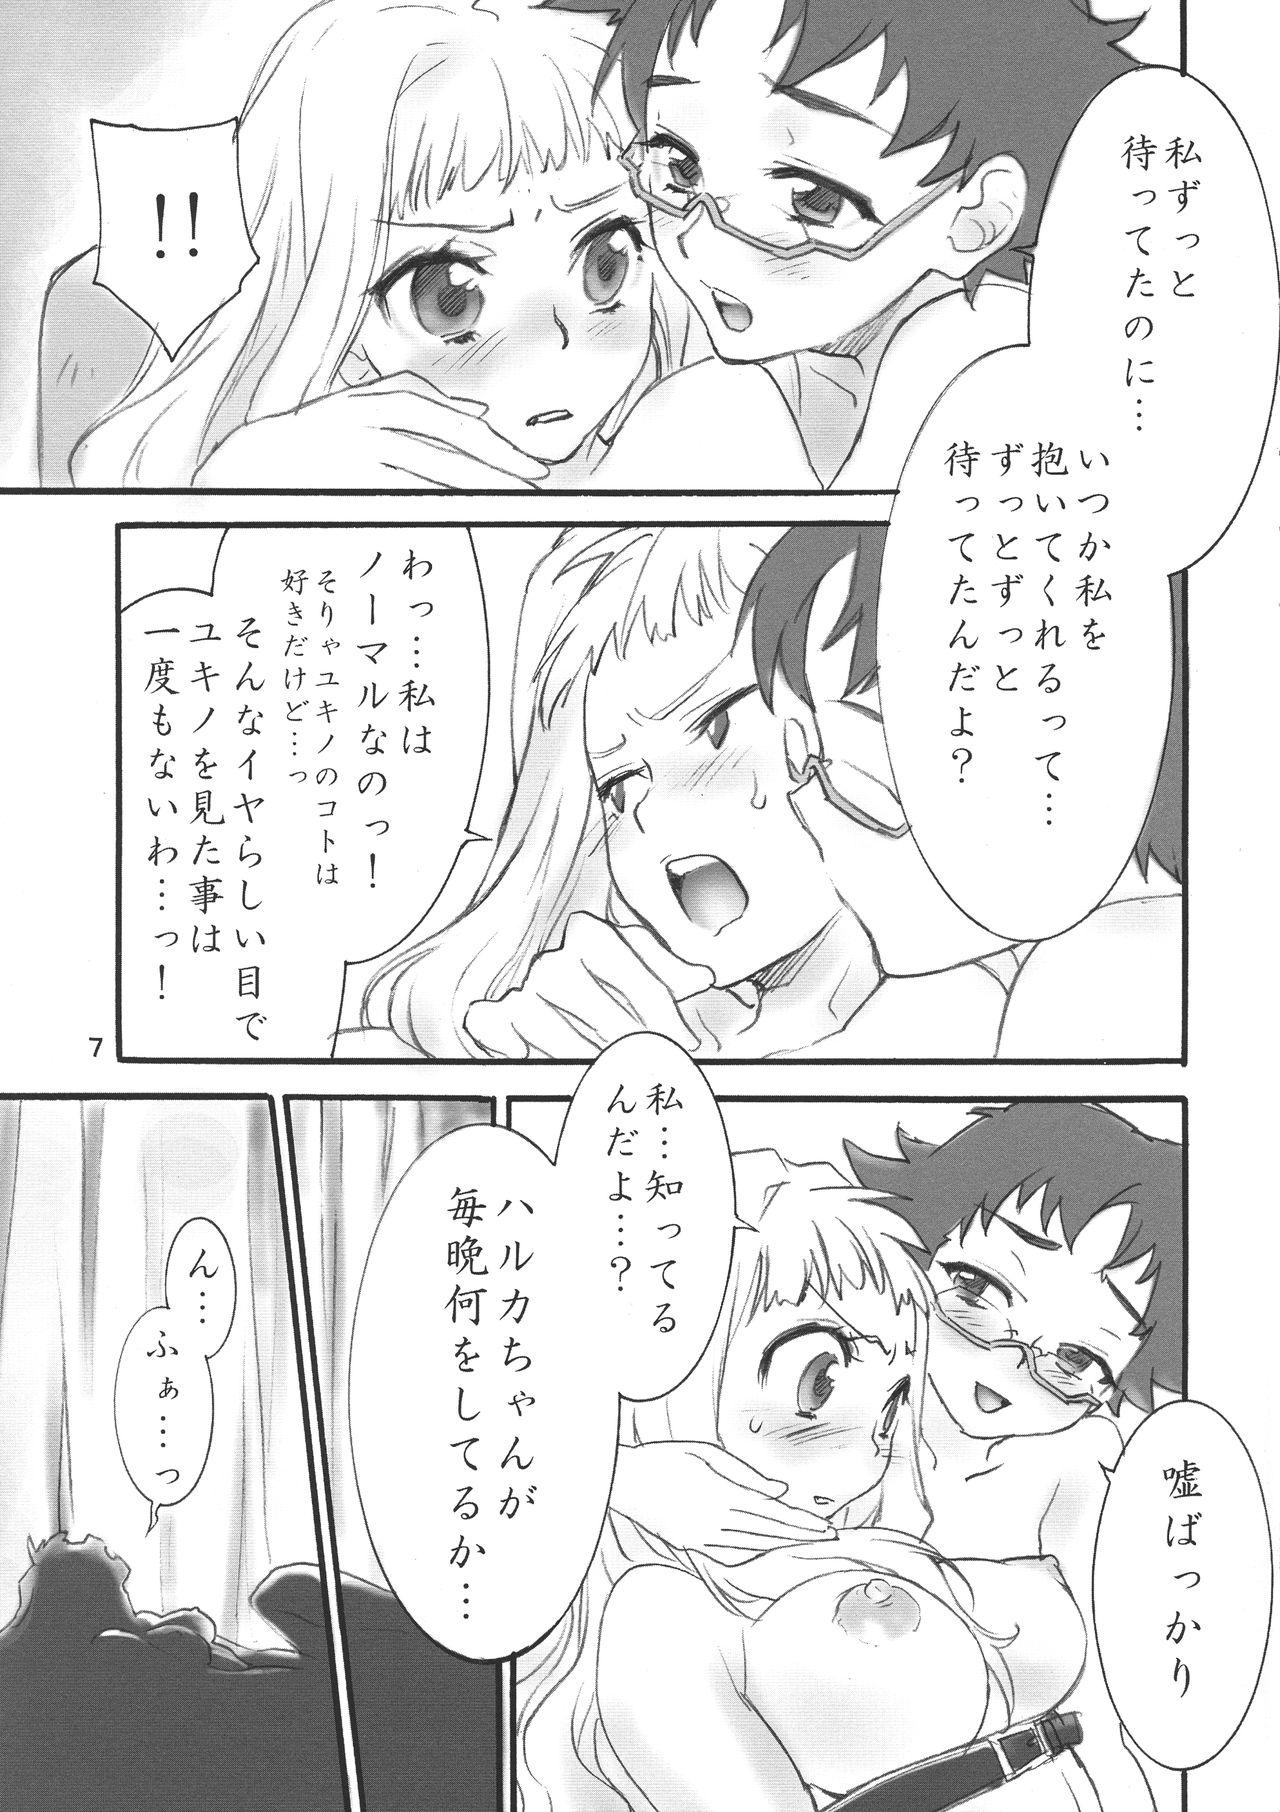 8teenxxx En - Gundam seed destiny Ichigo 100 Mai-hime Webcamsex - Page 7